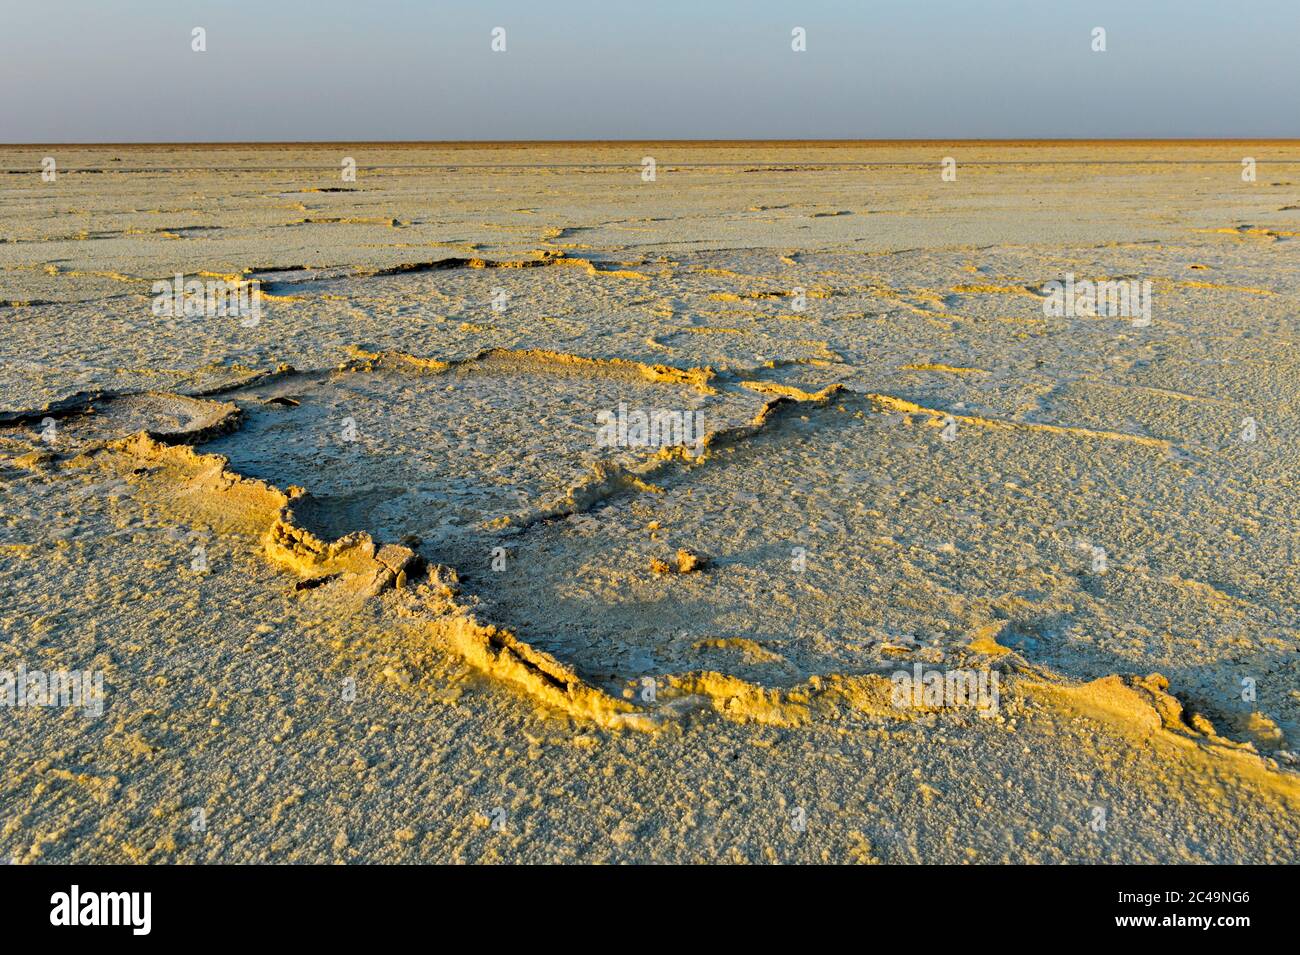 Salt crust on Lake Assale, located more than 100m below sea level, Hamadela, Danakil depression, Afar Triangle, Ethiopia Stock Photo